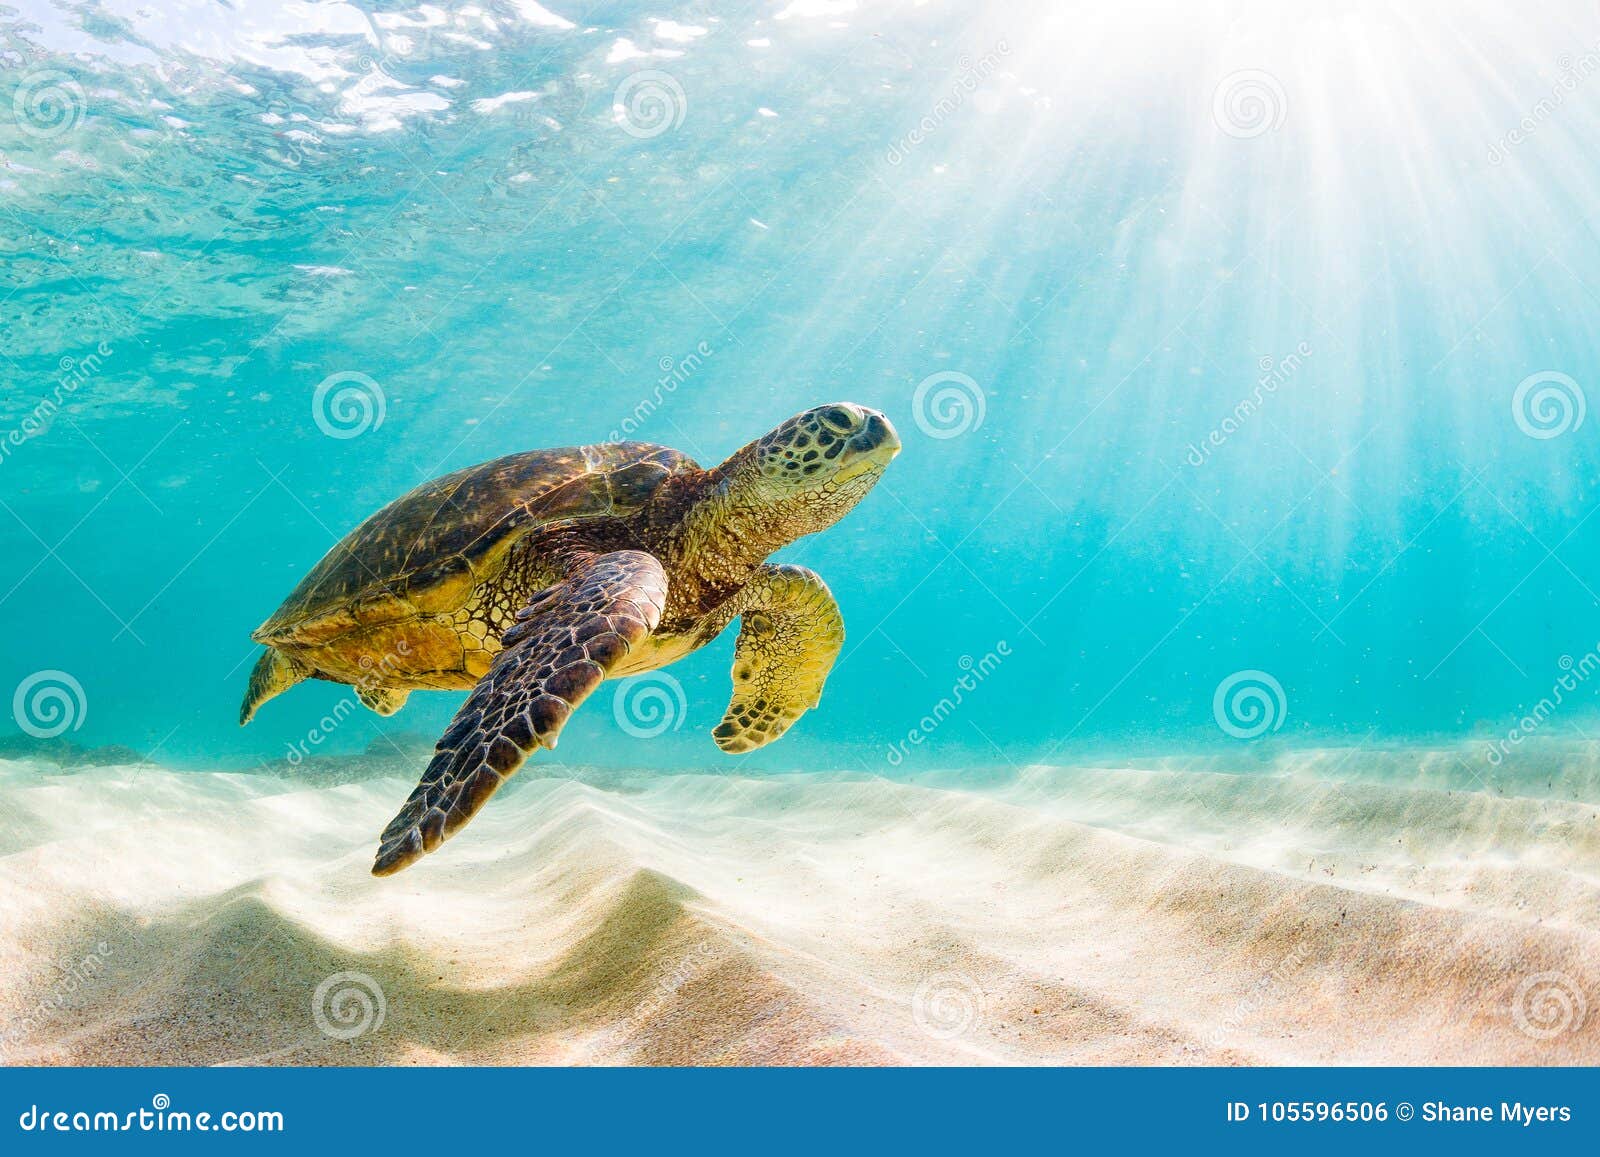 hawaiian green sea turtle cruising in the warm waters of the pacific ocean